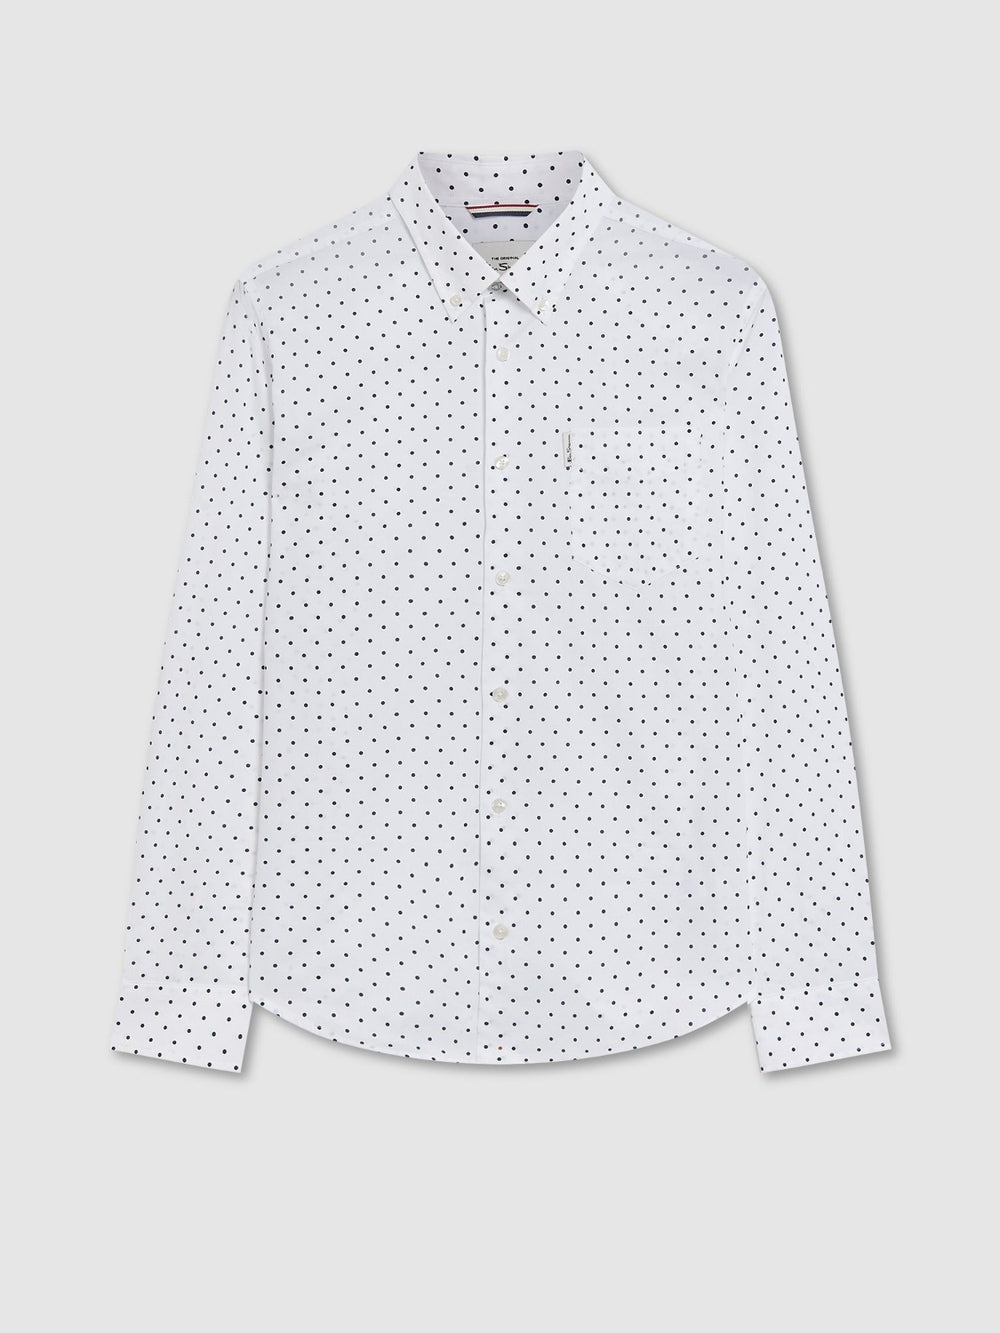 Ben Sherman Long Sleeve Classic Polka Dot Shirt Clothing, $85